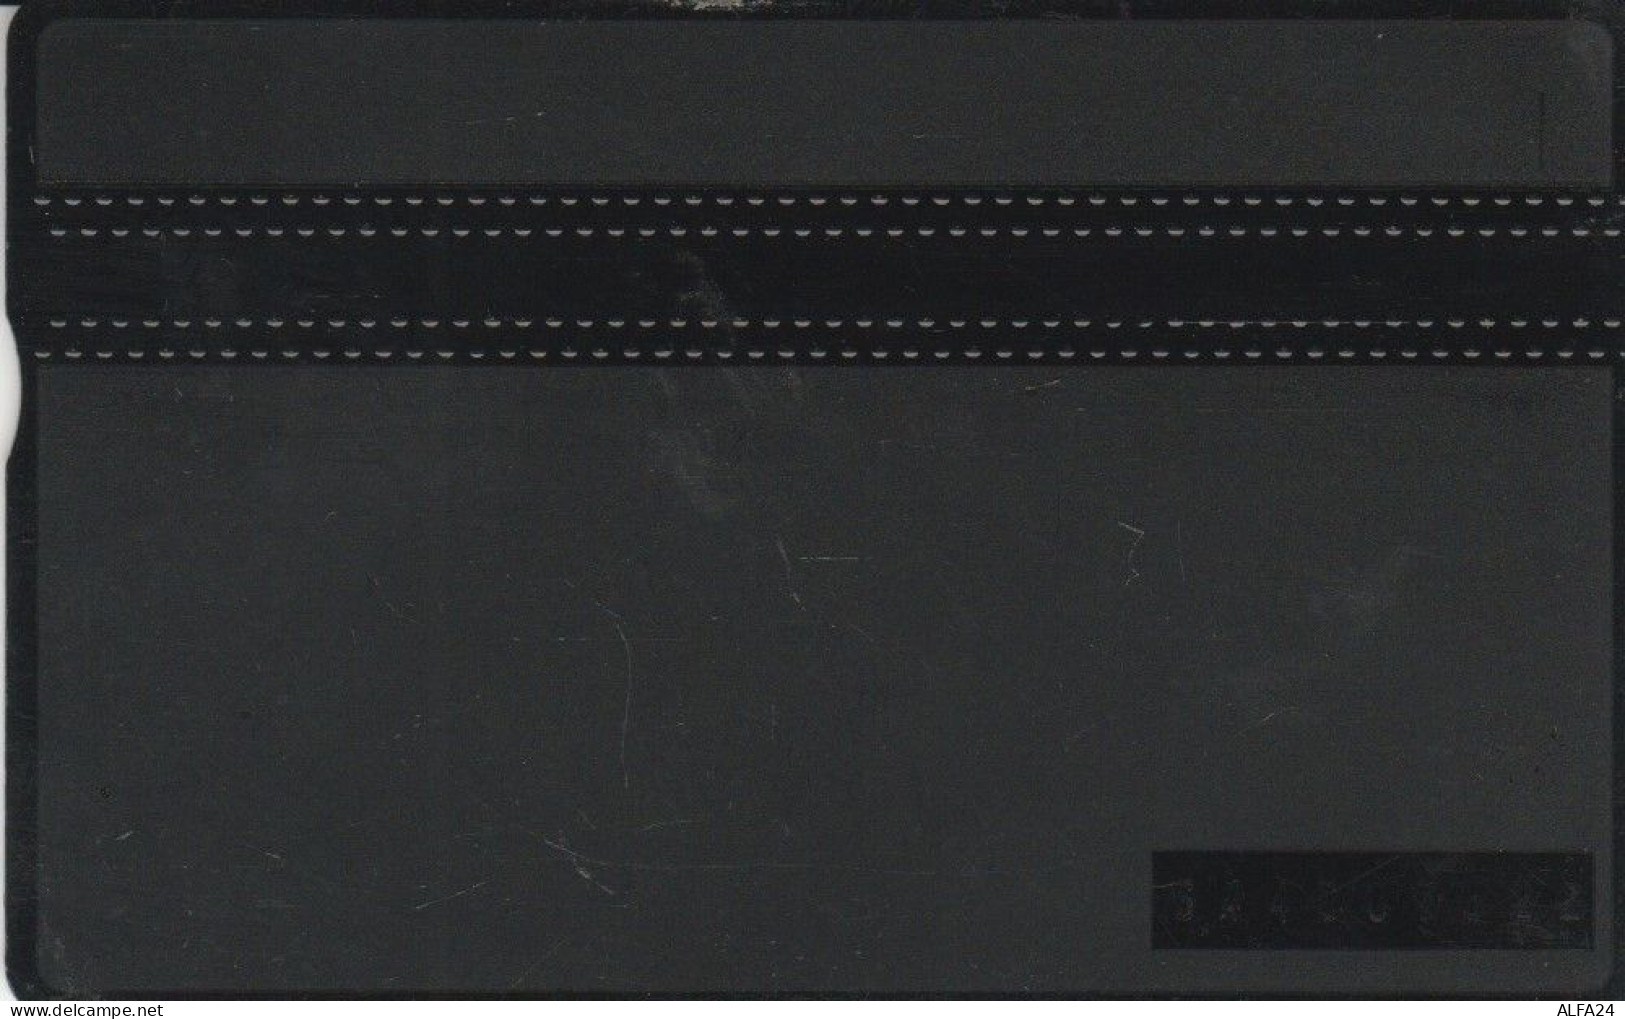 PHONE CARD BELGIO LANDIS (CK6018 - Senza Chip